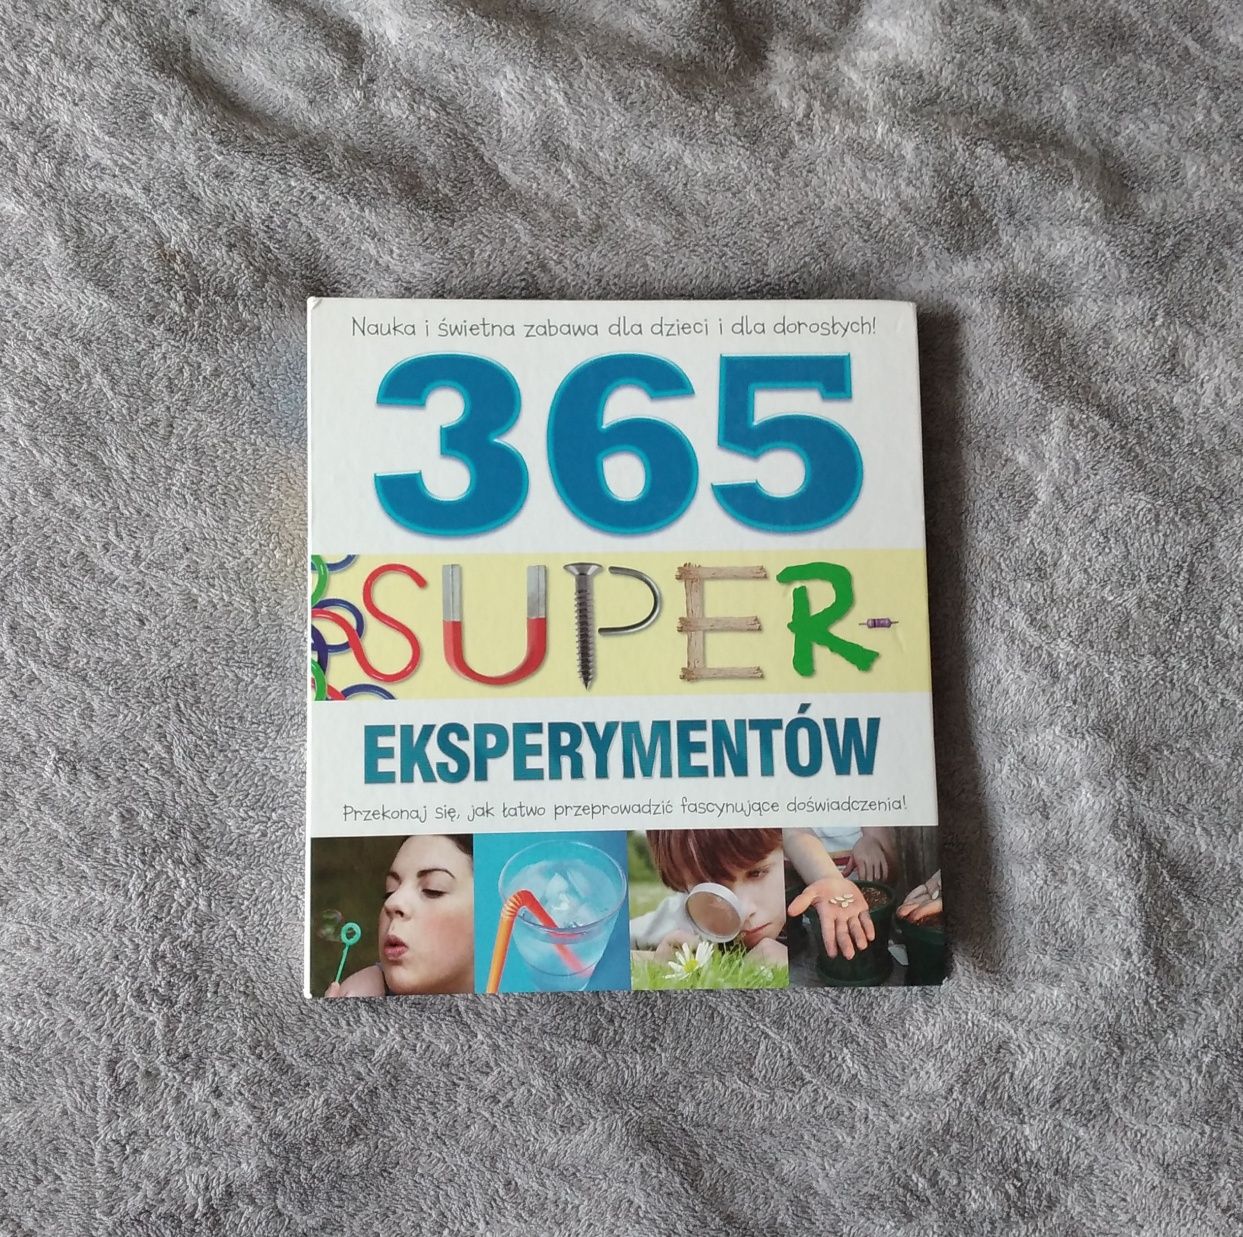 Książka  "365 super eksperymentów"